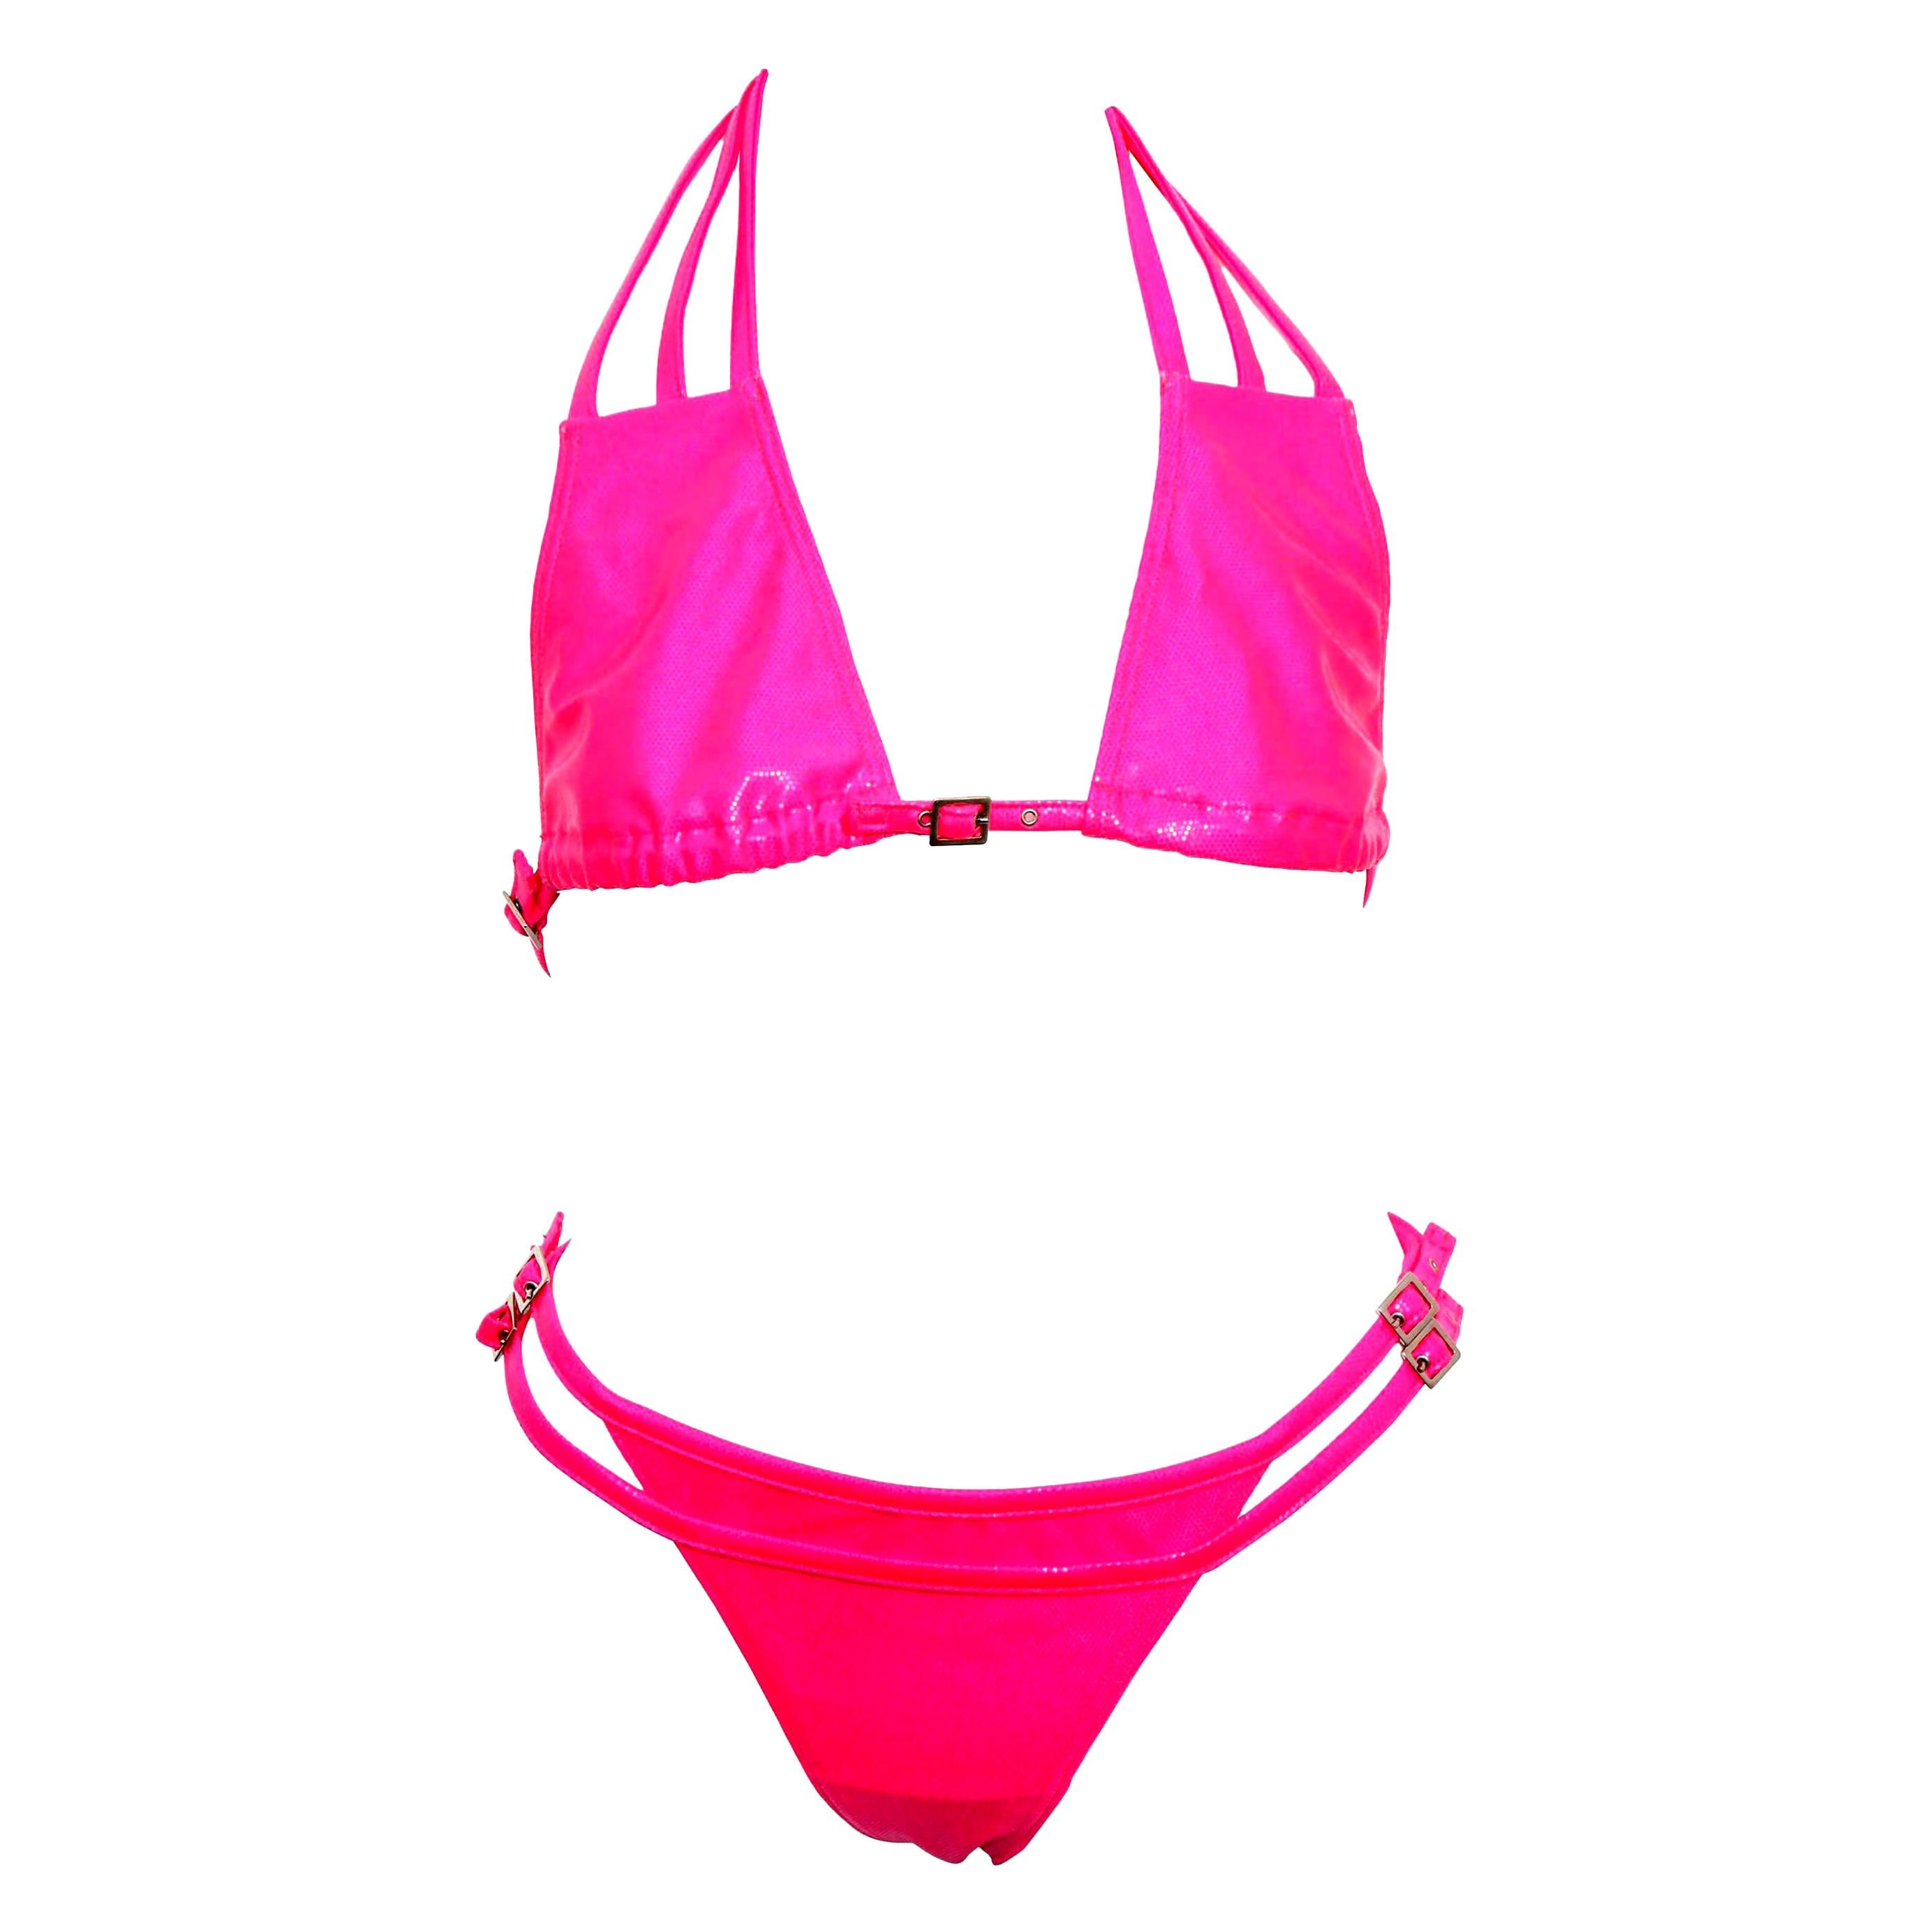 John Galliano for Christian Dior Pink Bikini For Sale